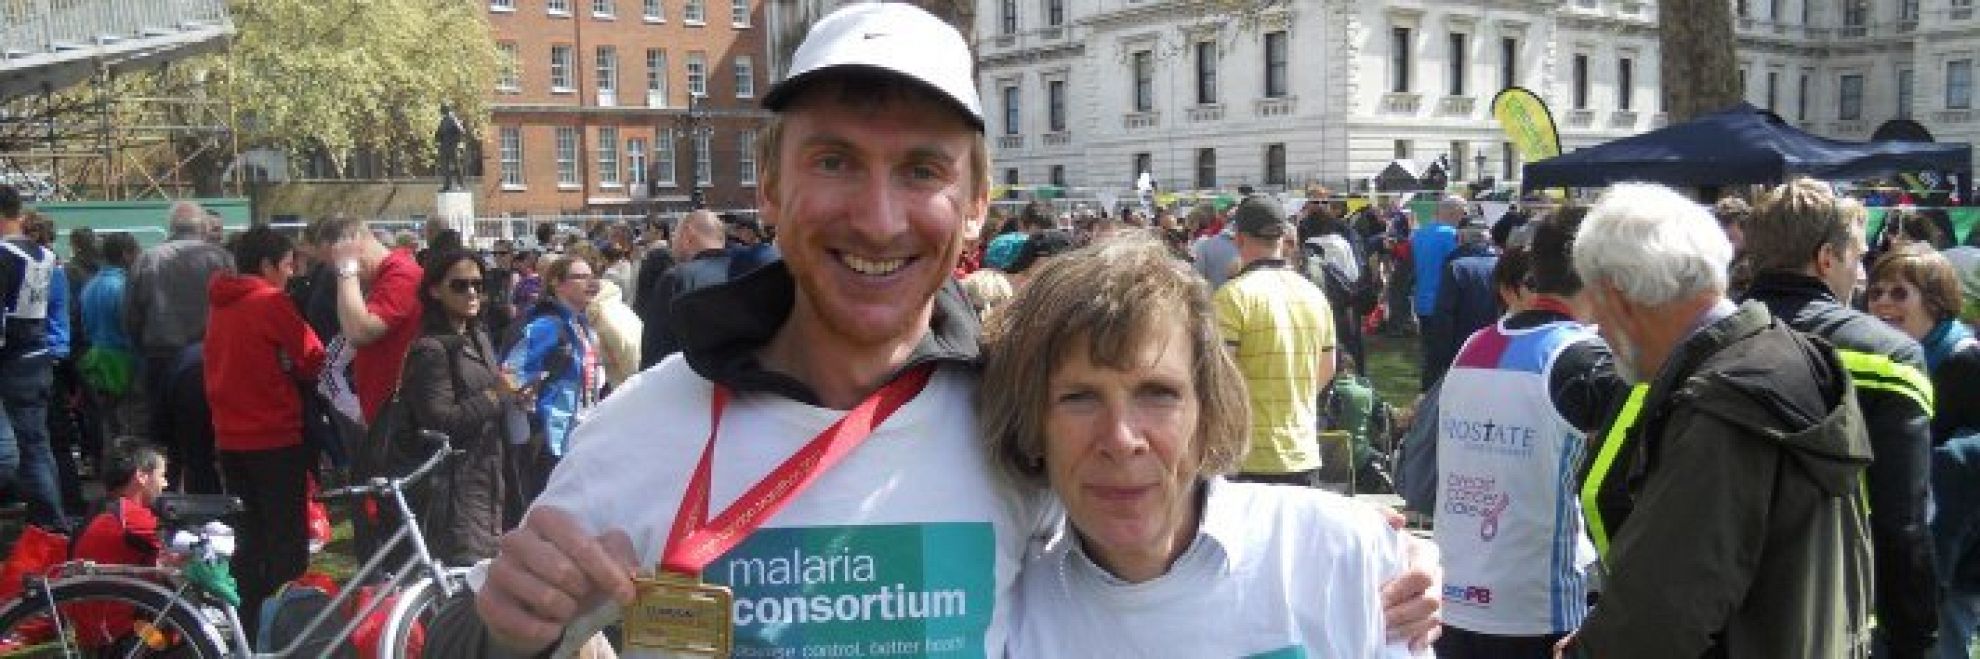 Latest News Racing to end malaria london marathon 2012